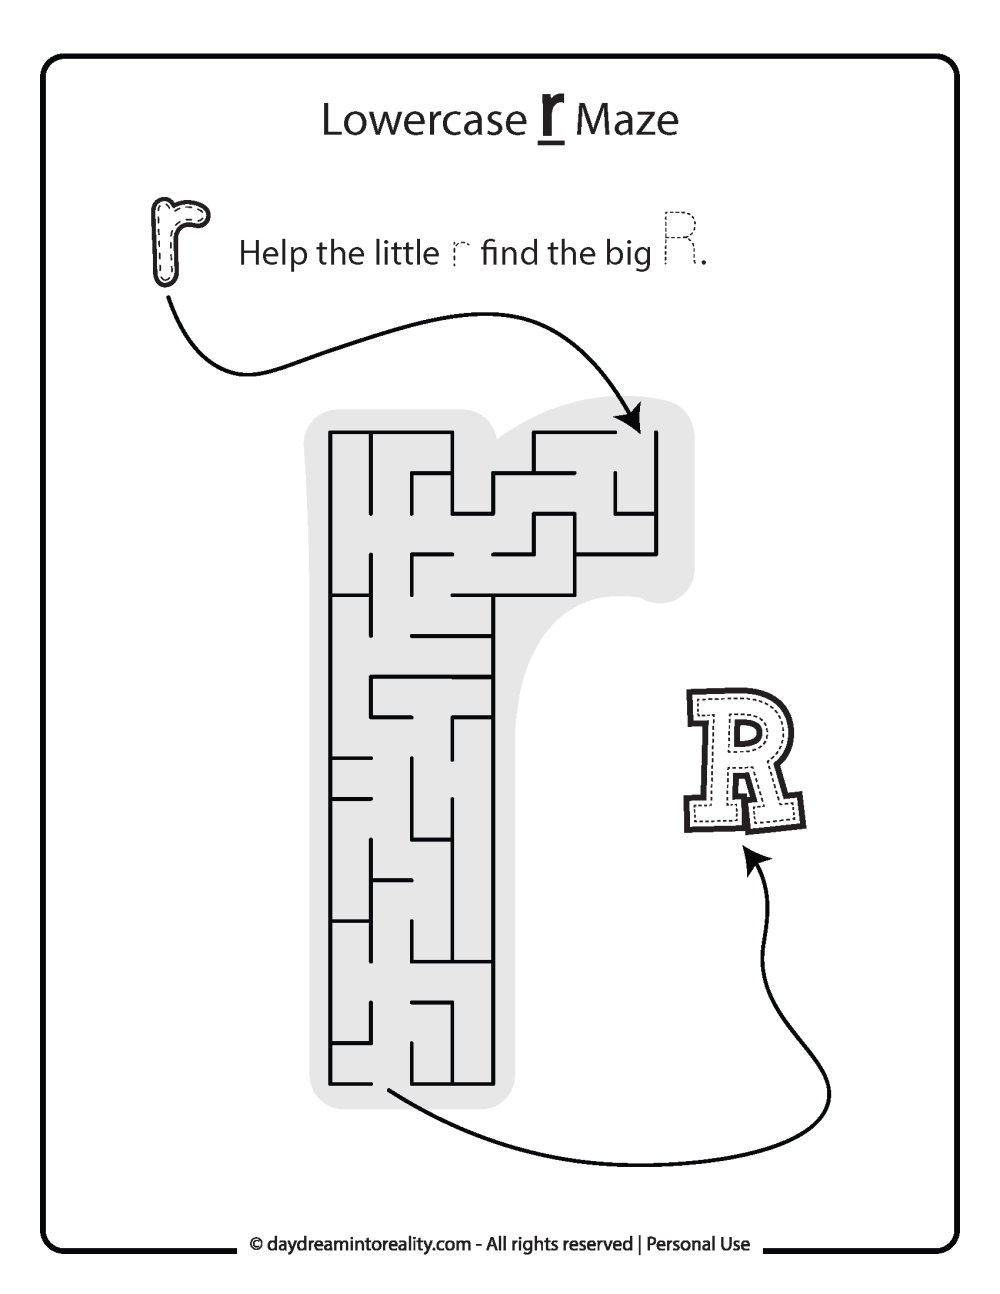 Lowercase "r" Maze Free Printable.